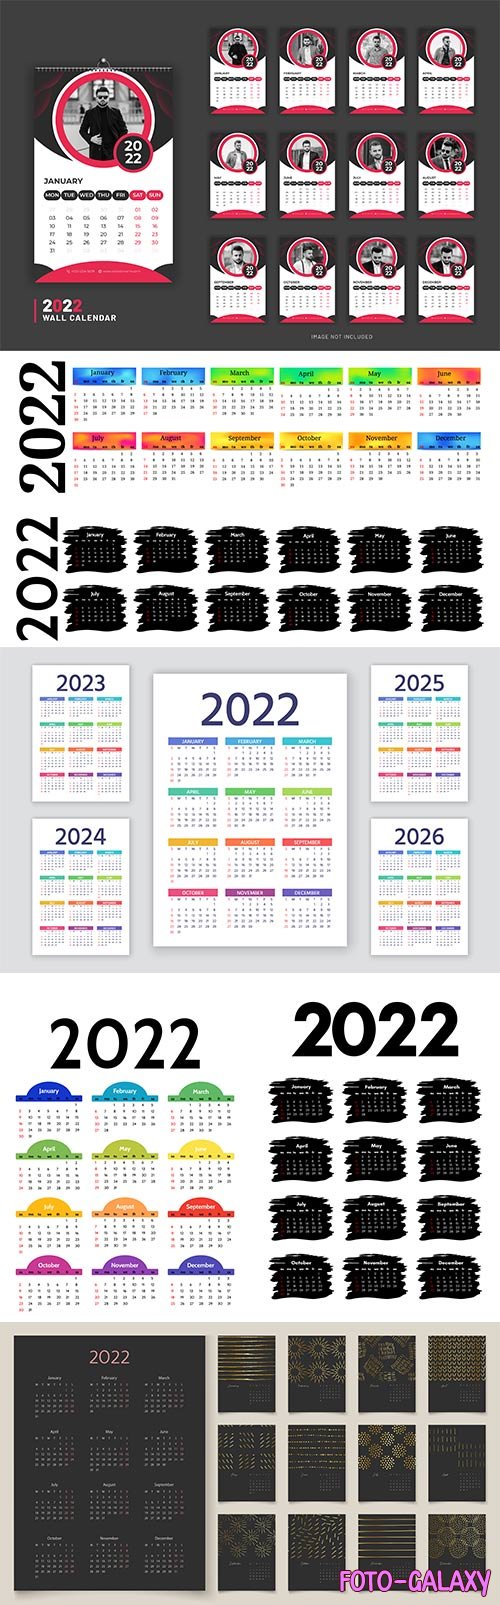 Calendar 2022 design template premium vector